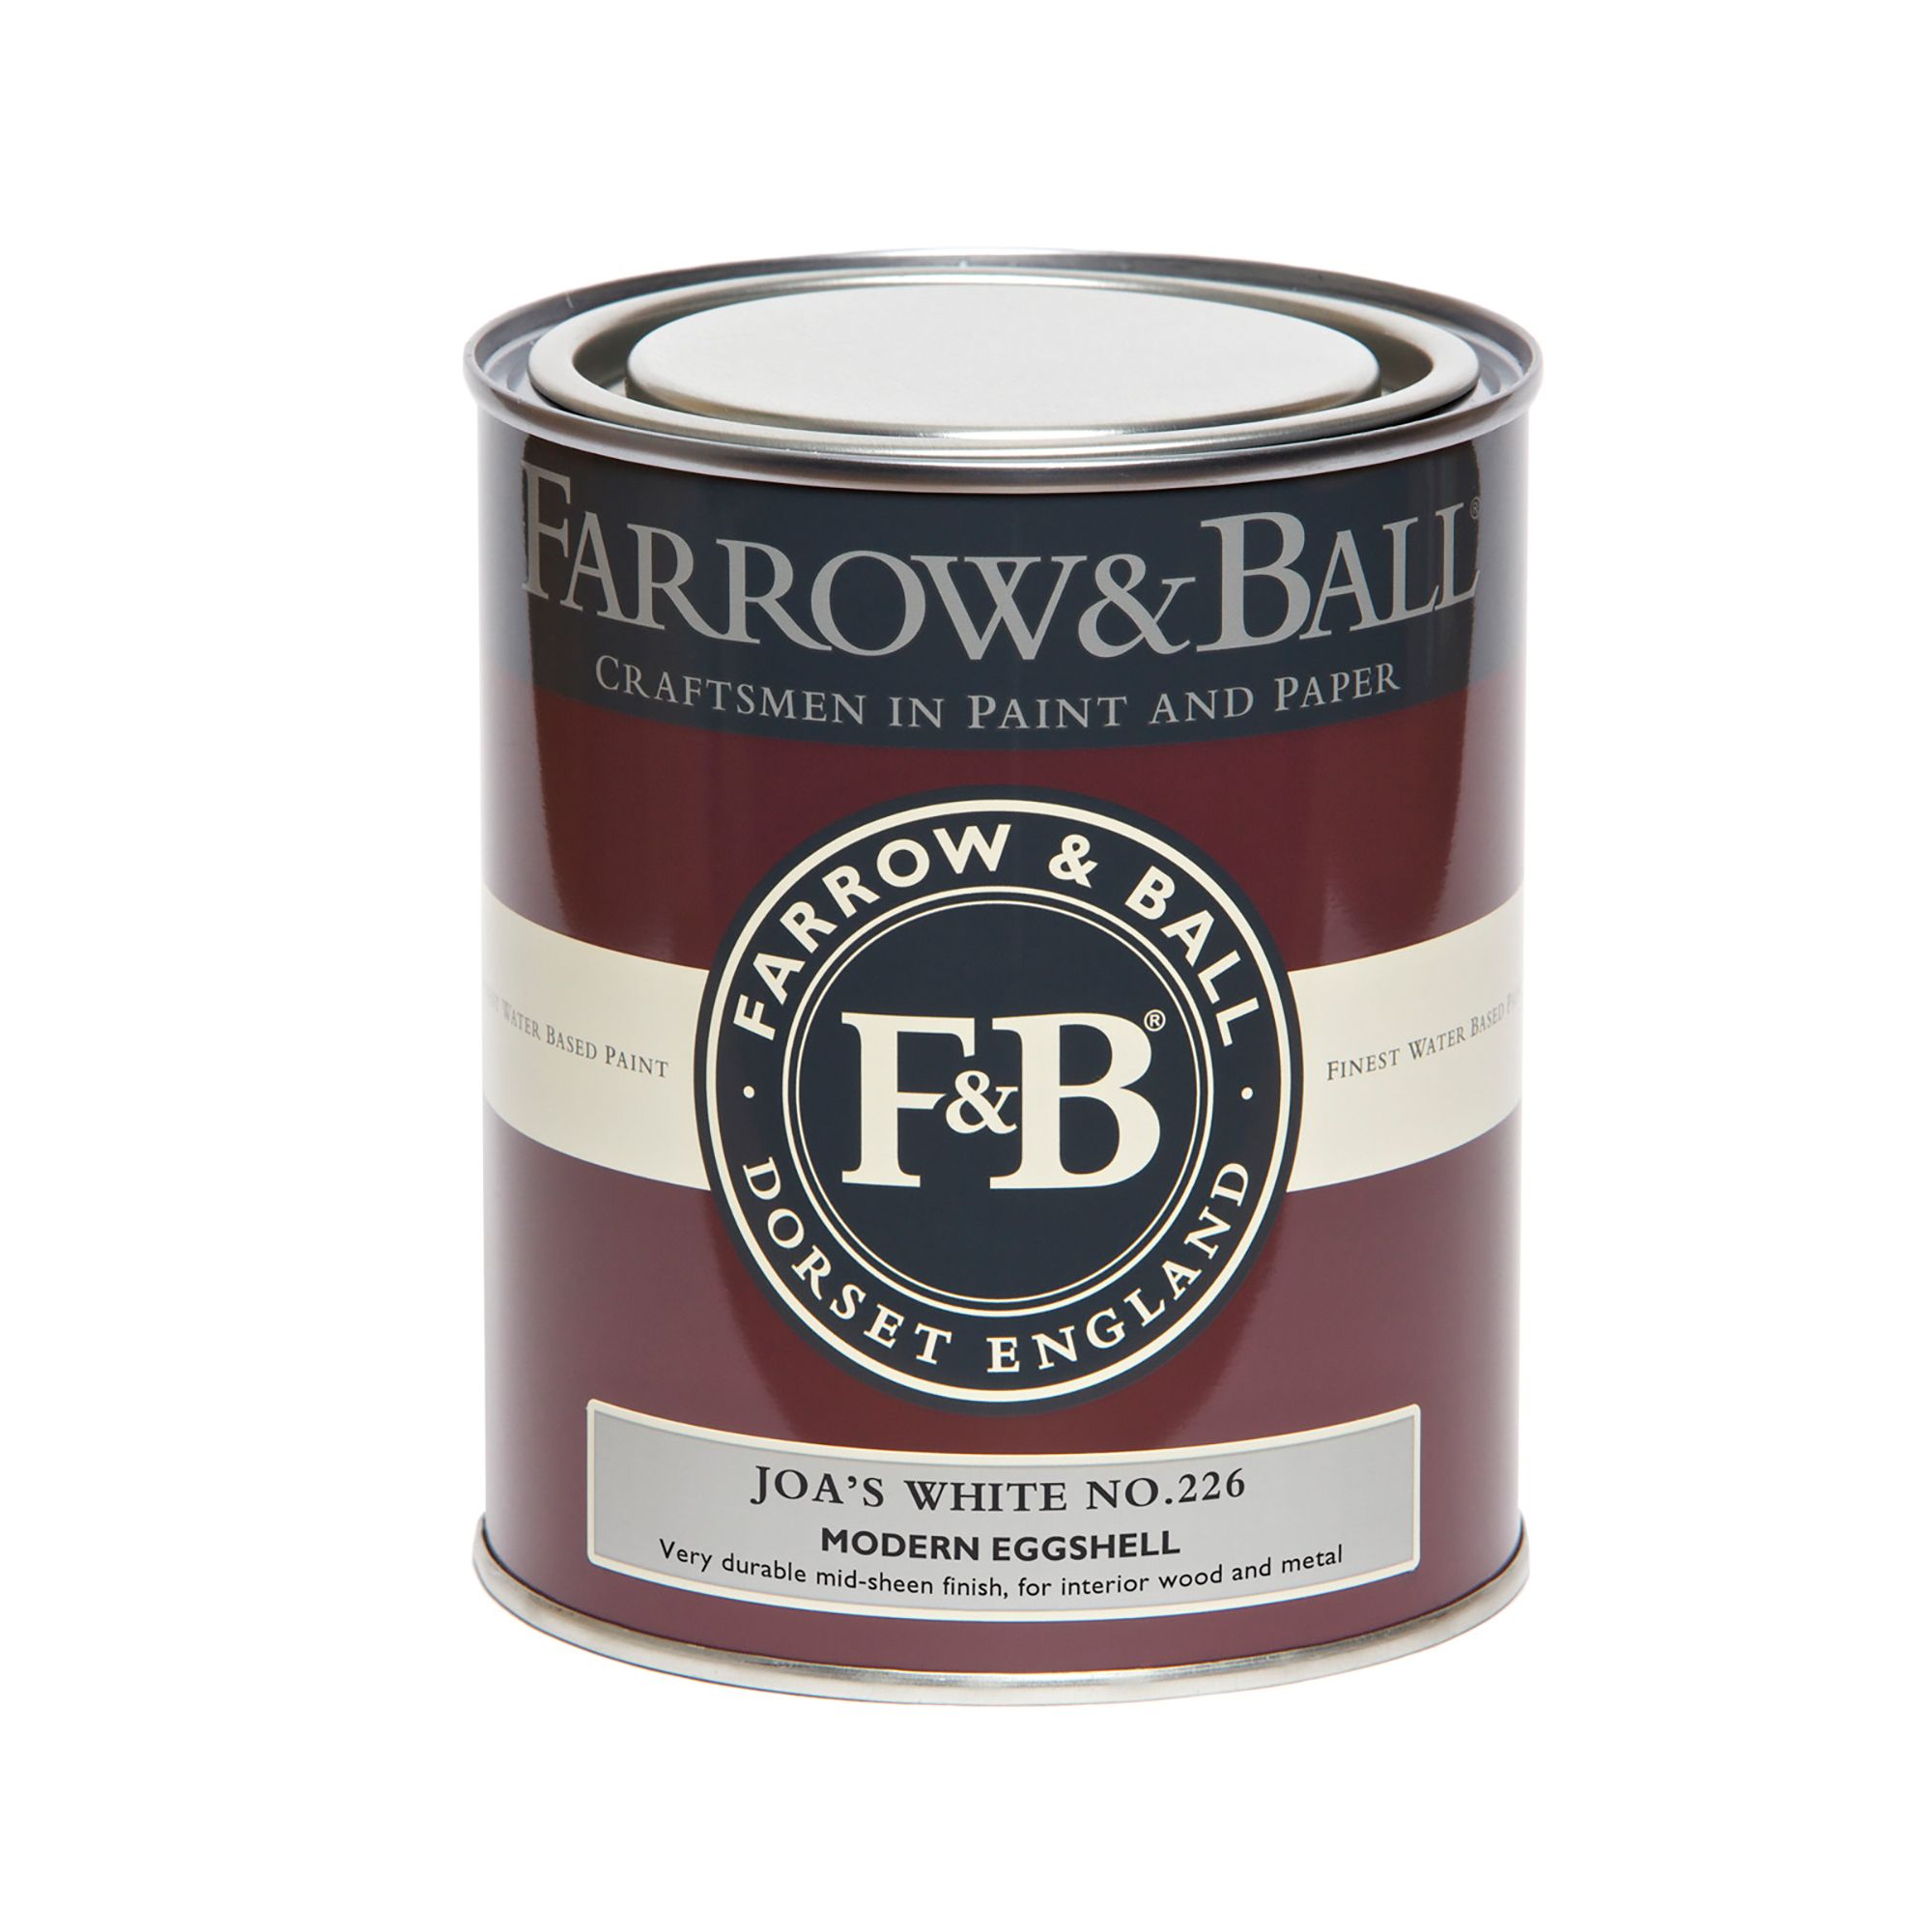 Farrow & Ball Modern Joa's White No.226 Eggshell Paint, 750ml